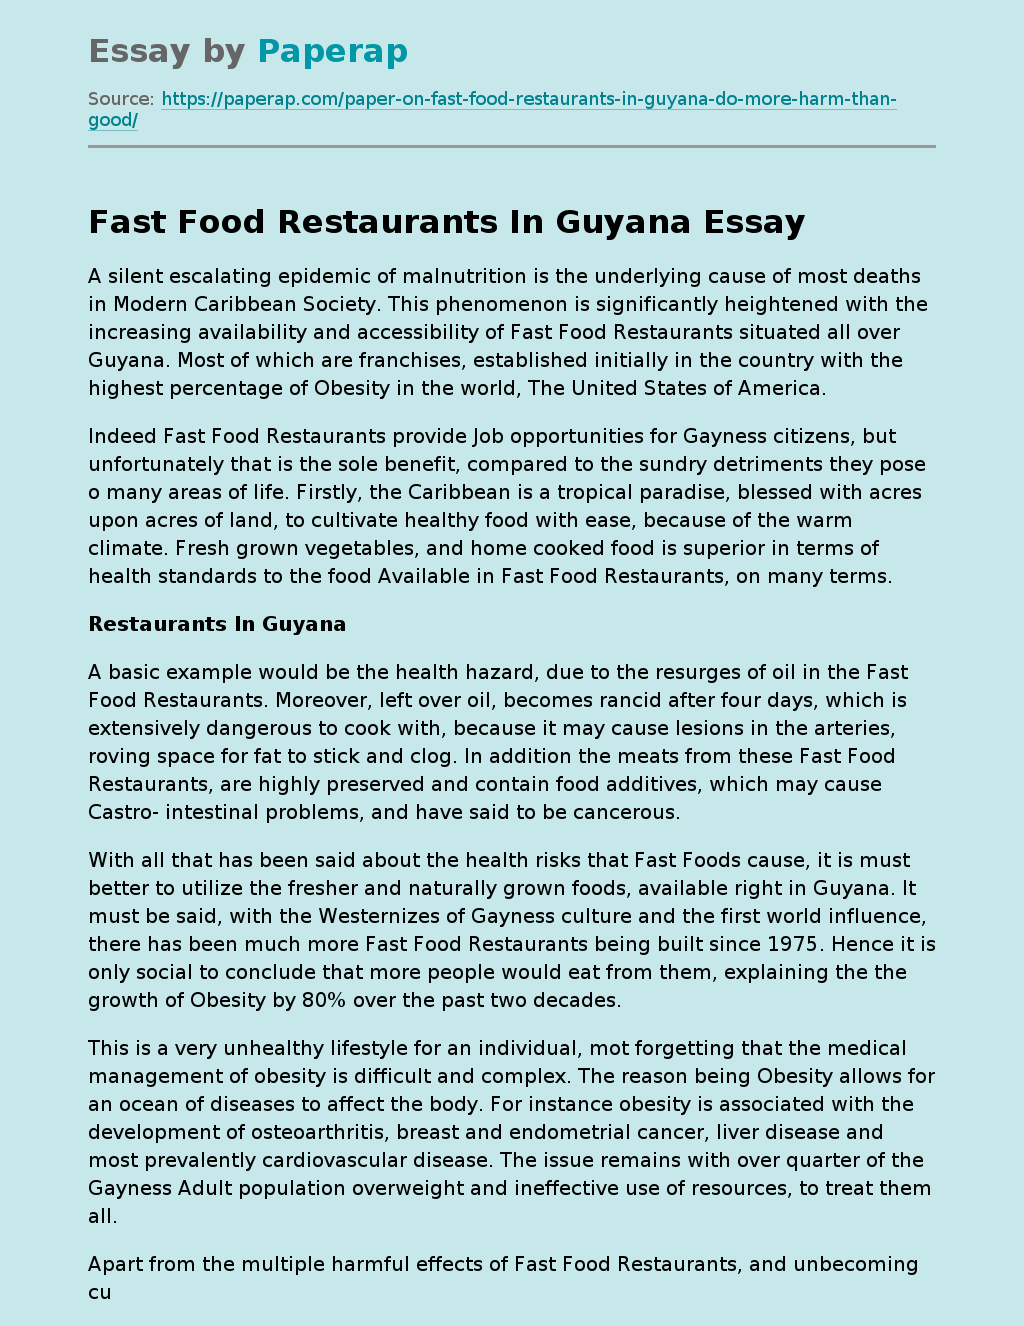 Fast Food Restaurants In Guyana